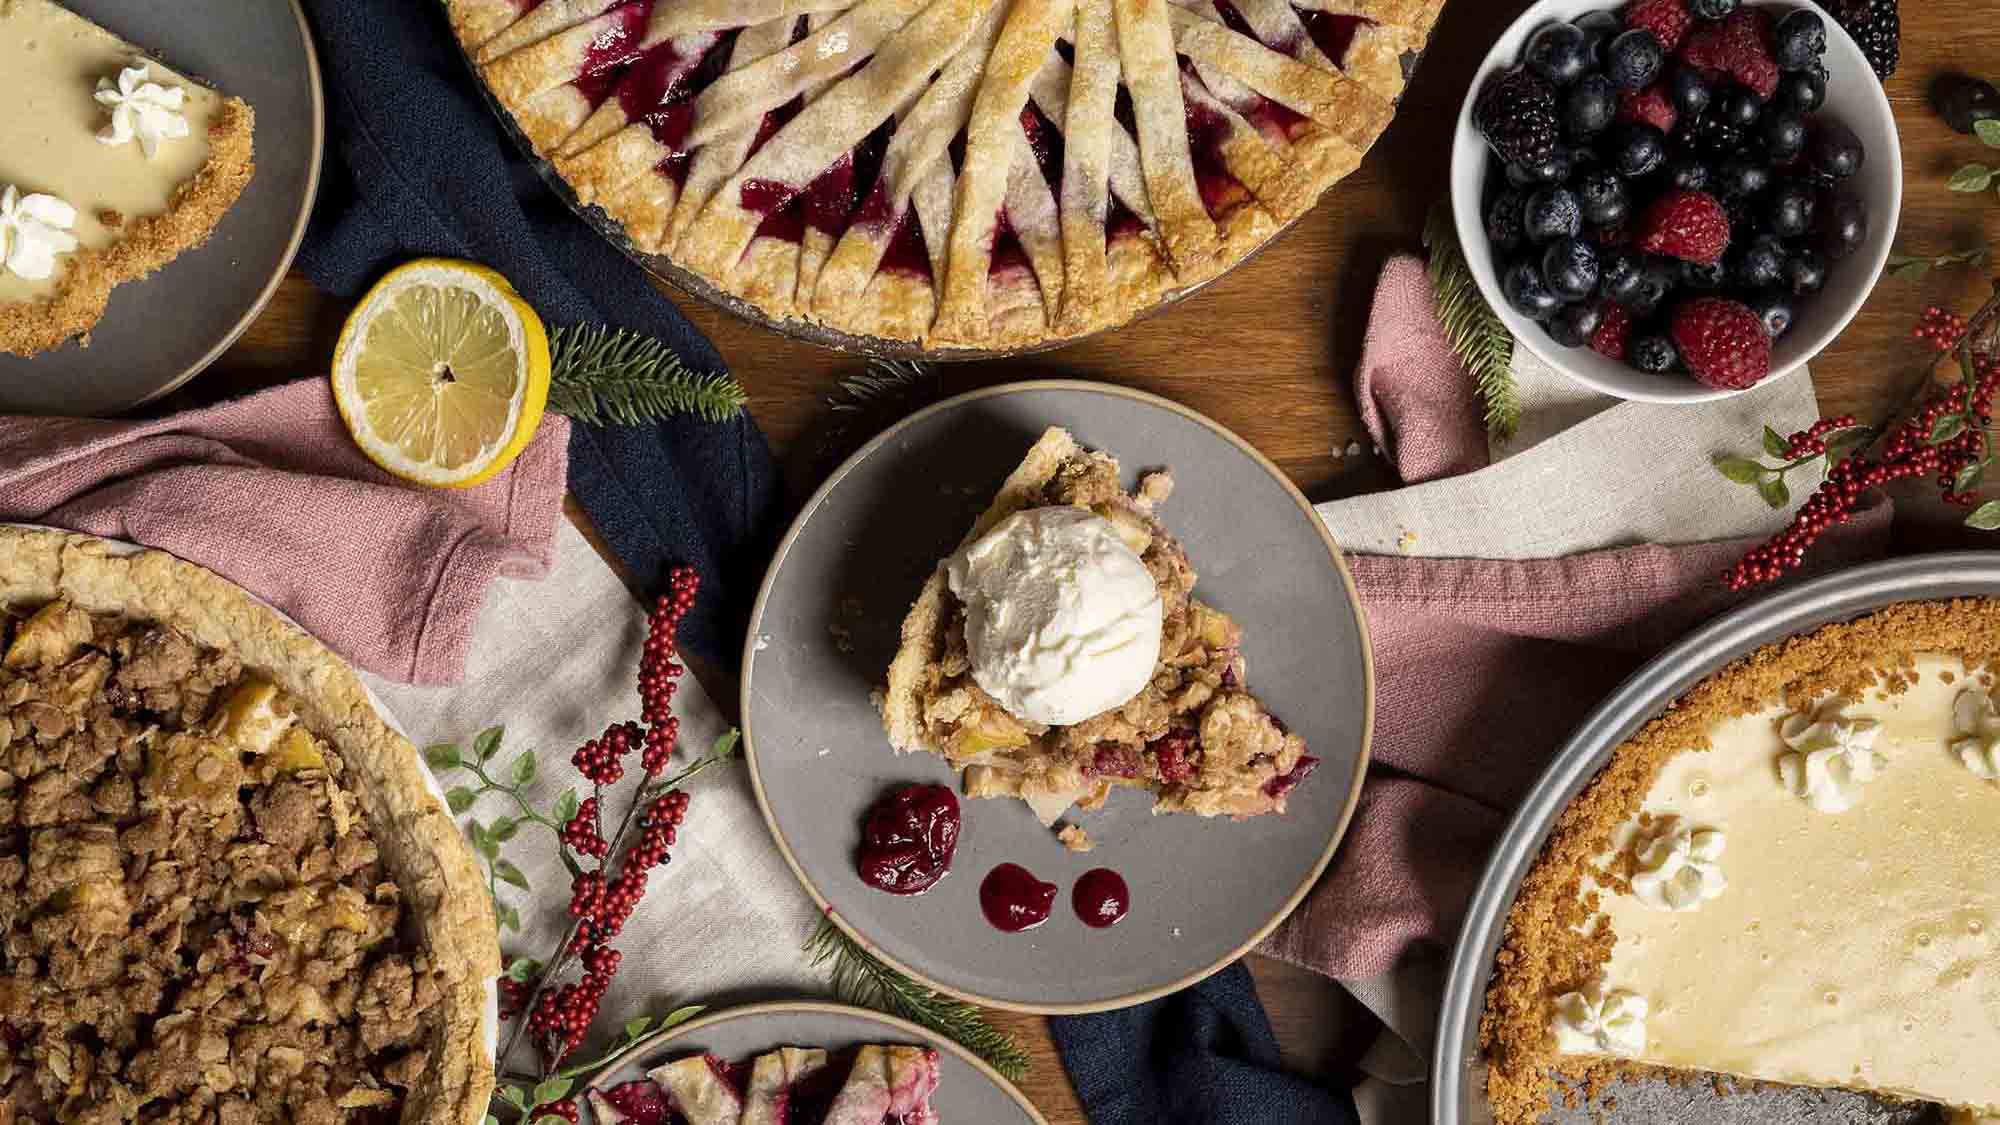 Apple Pie with Graham Cracker Crust - Salt & Baker